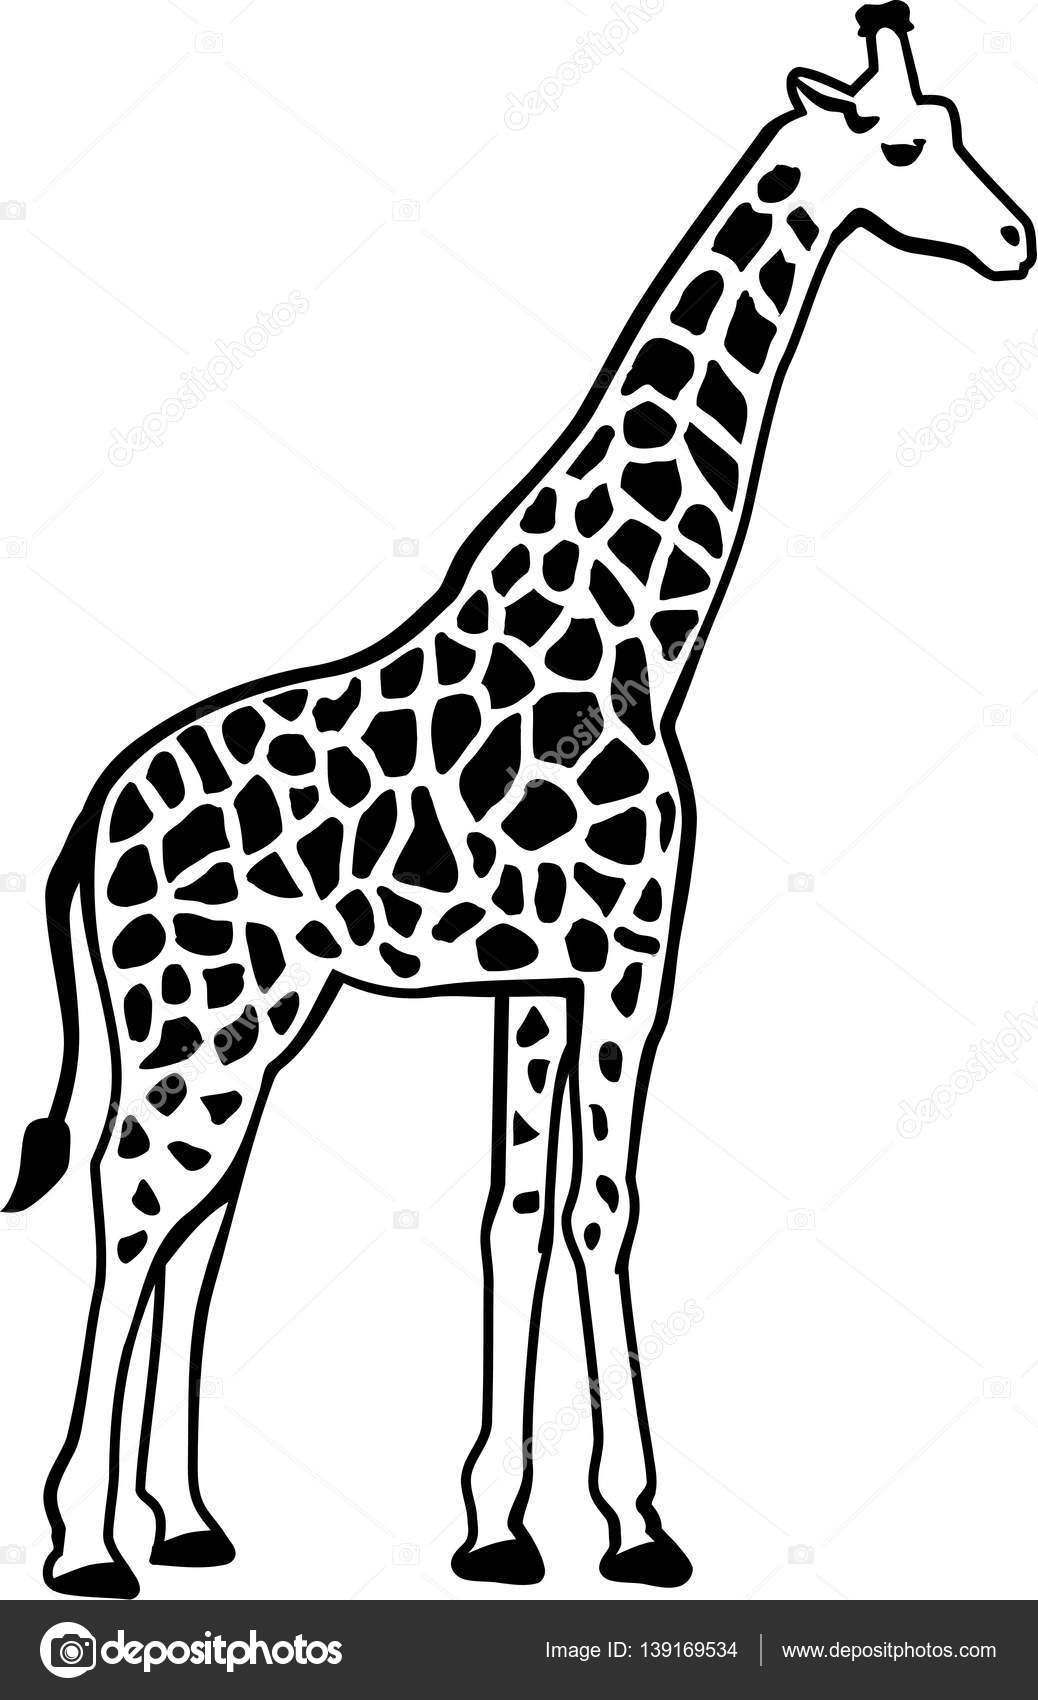 Giraffe Silhouette Patterns